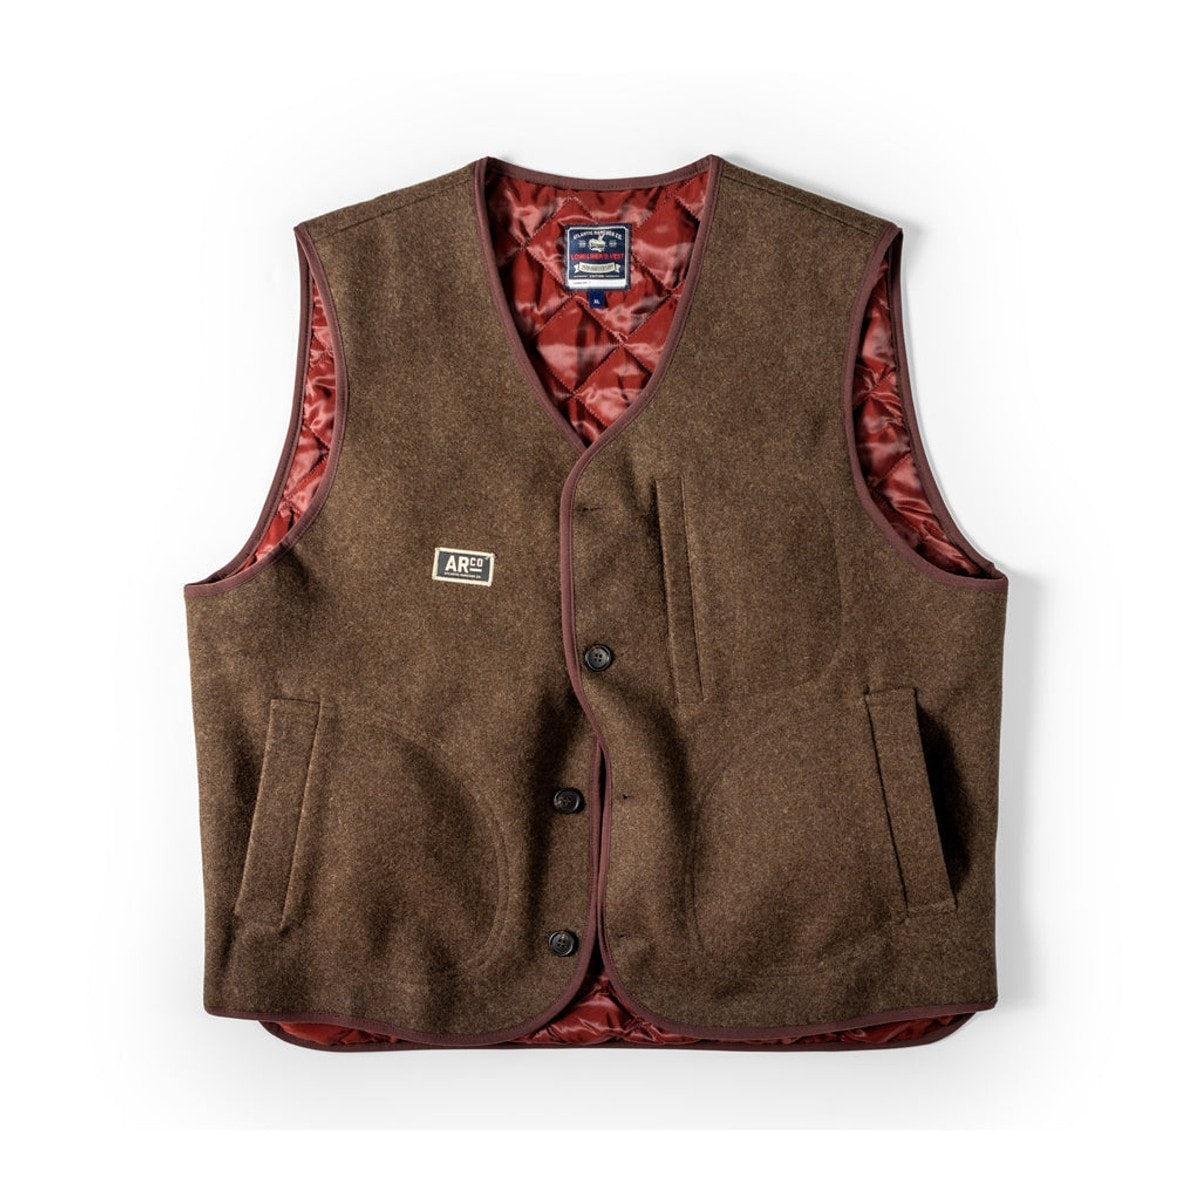 Recycled cotton V-neck sweater vest